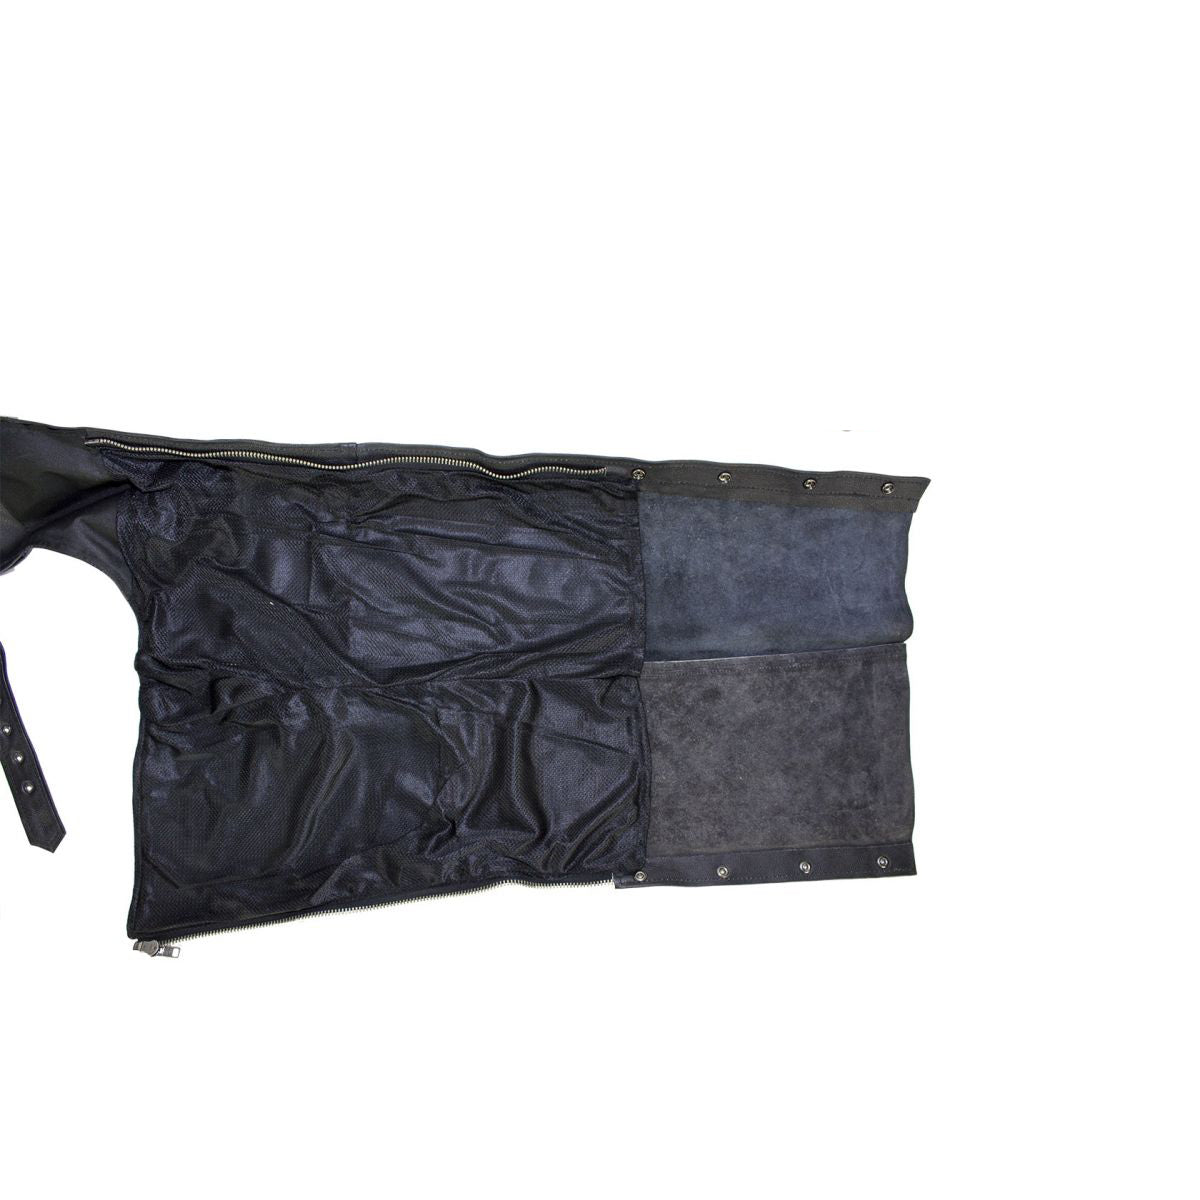 Black Multi-Pocket Premium Cowhide Leather Chaps